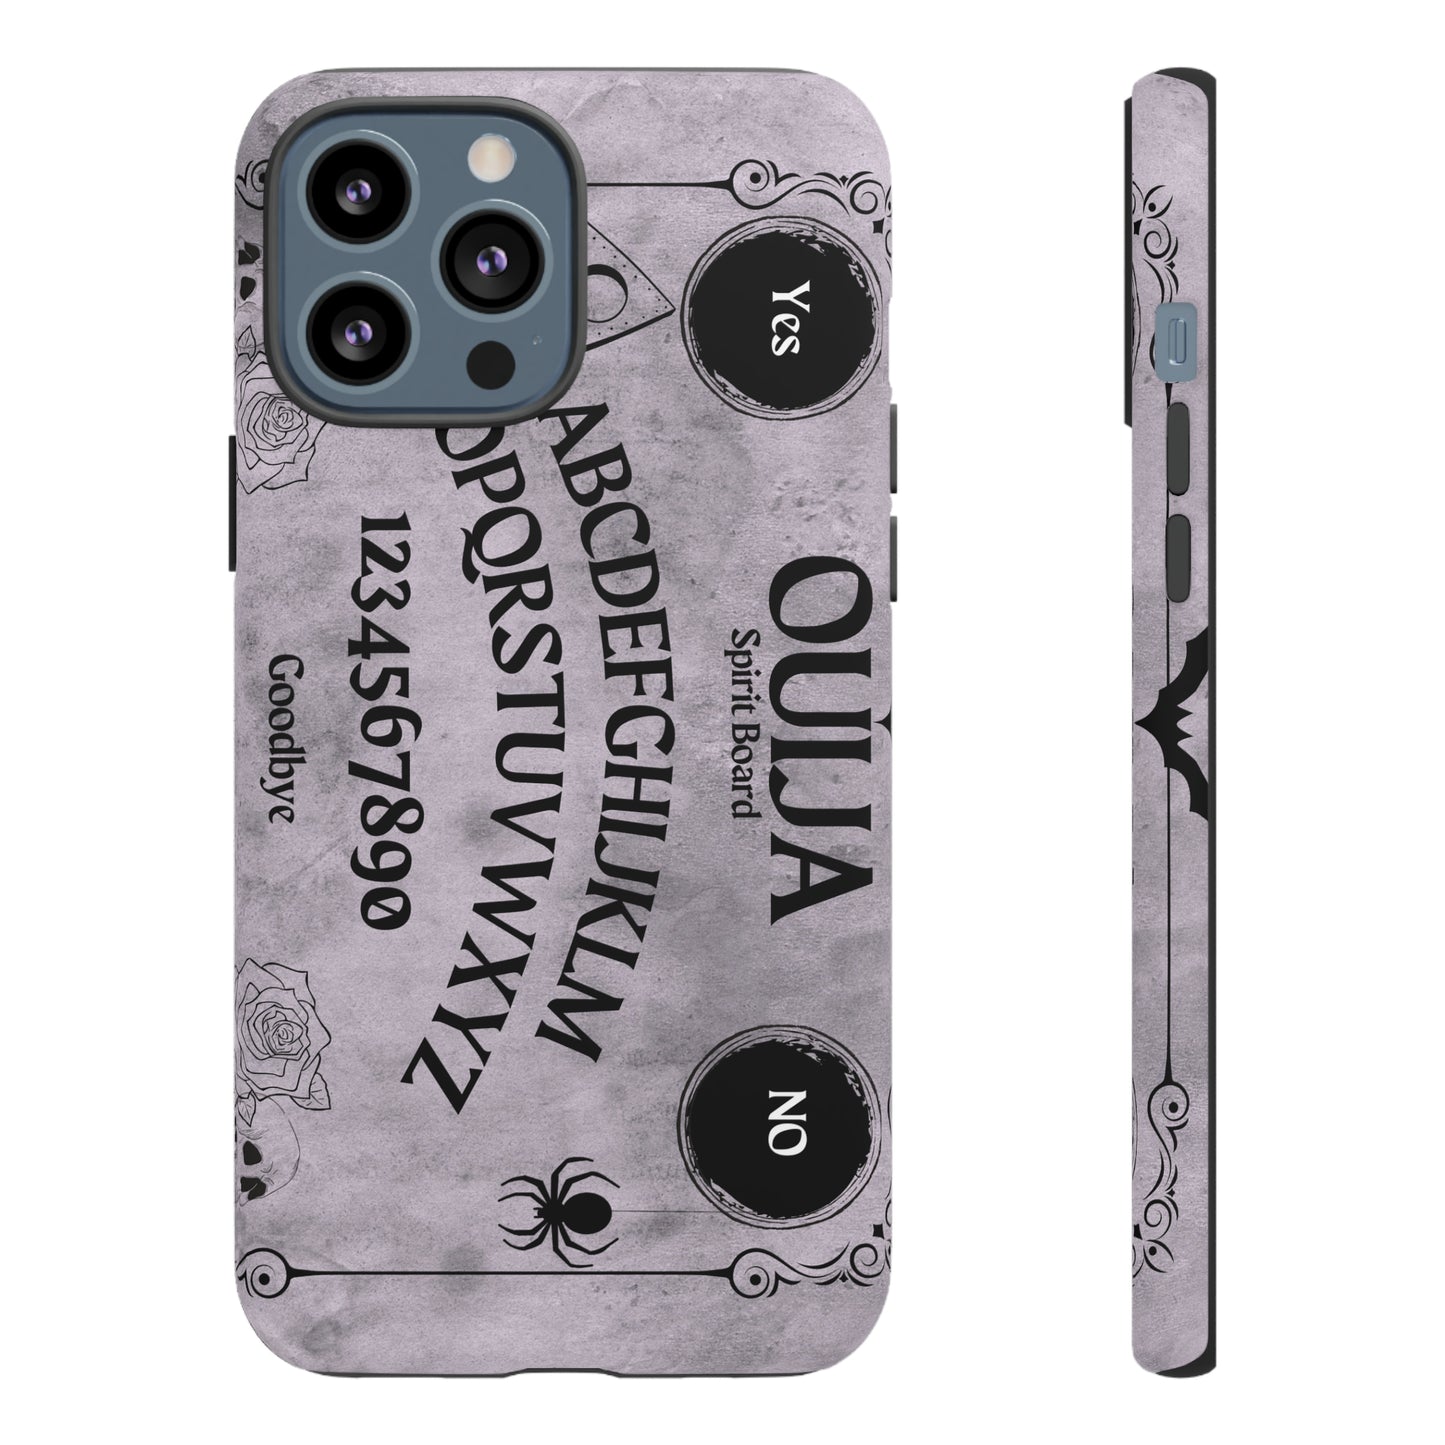 Ouija Board Tough Phone Cases For Samsung iPhone GooglePhone CaseVTZdesignsiPhone 13 Pro MaxMatteAccessoriesGlossyhalloween